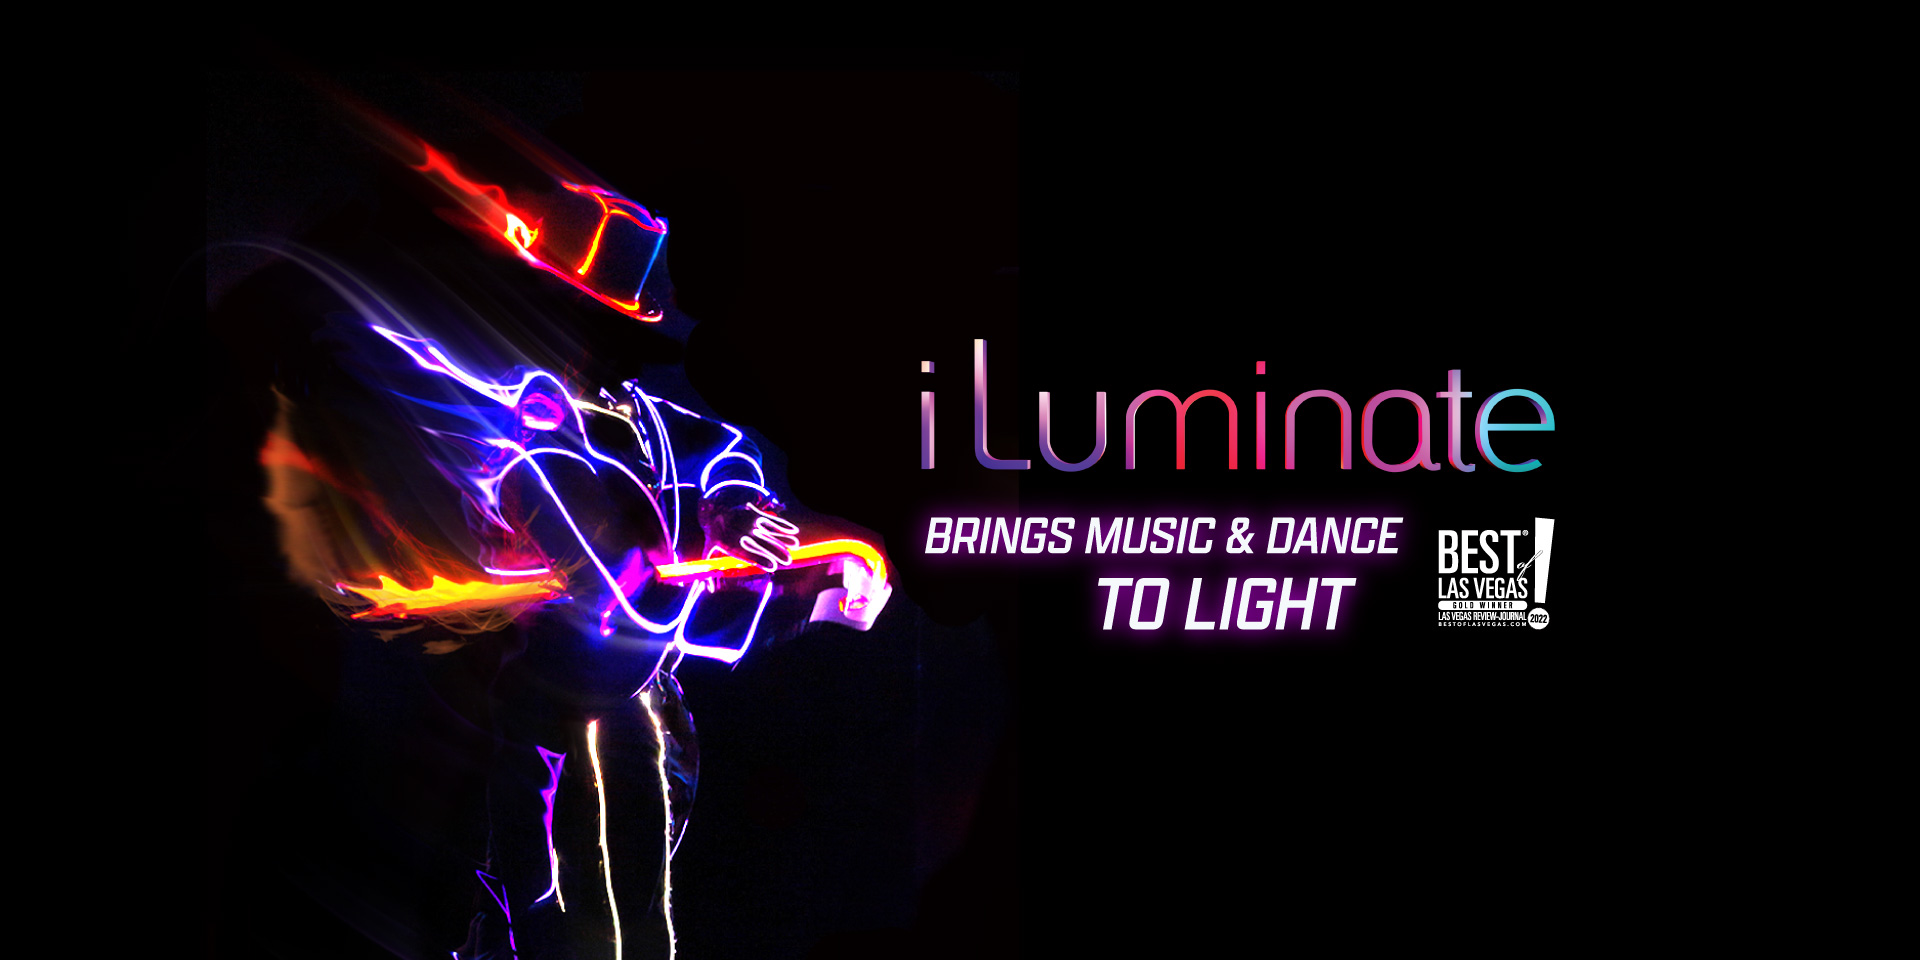 iLuminate Dinner & Show Package